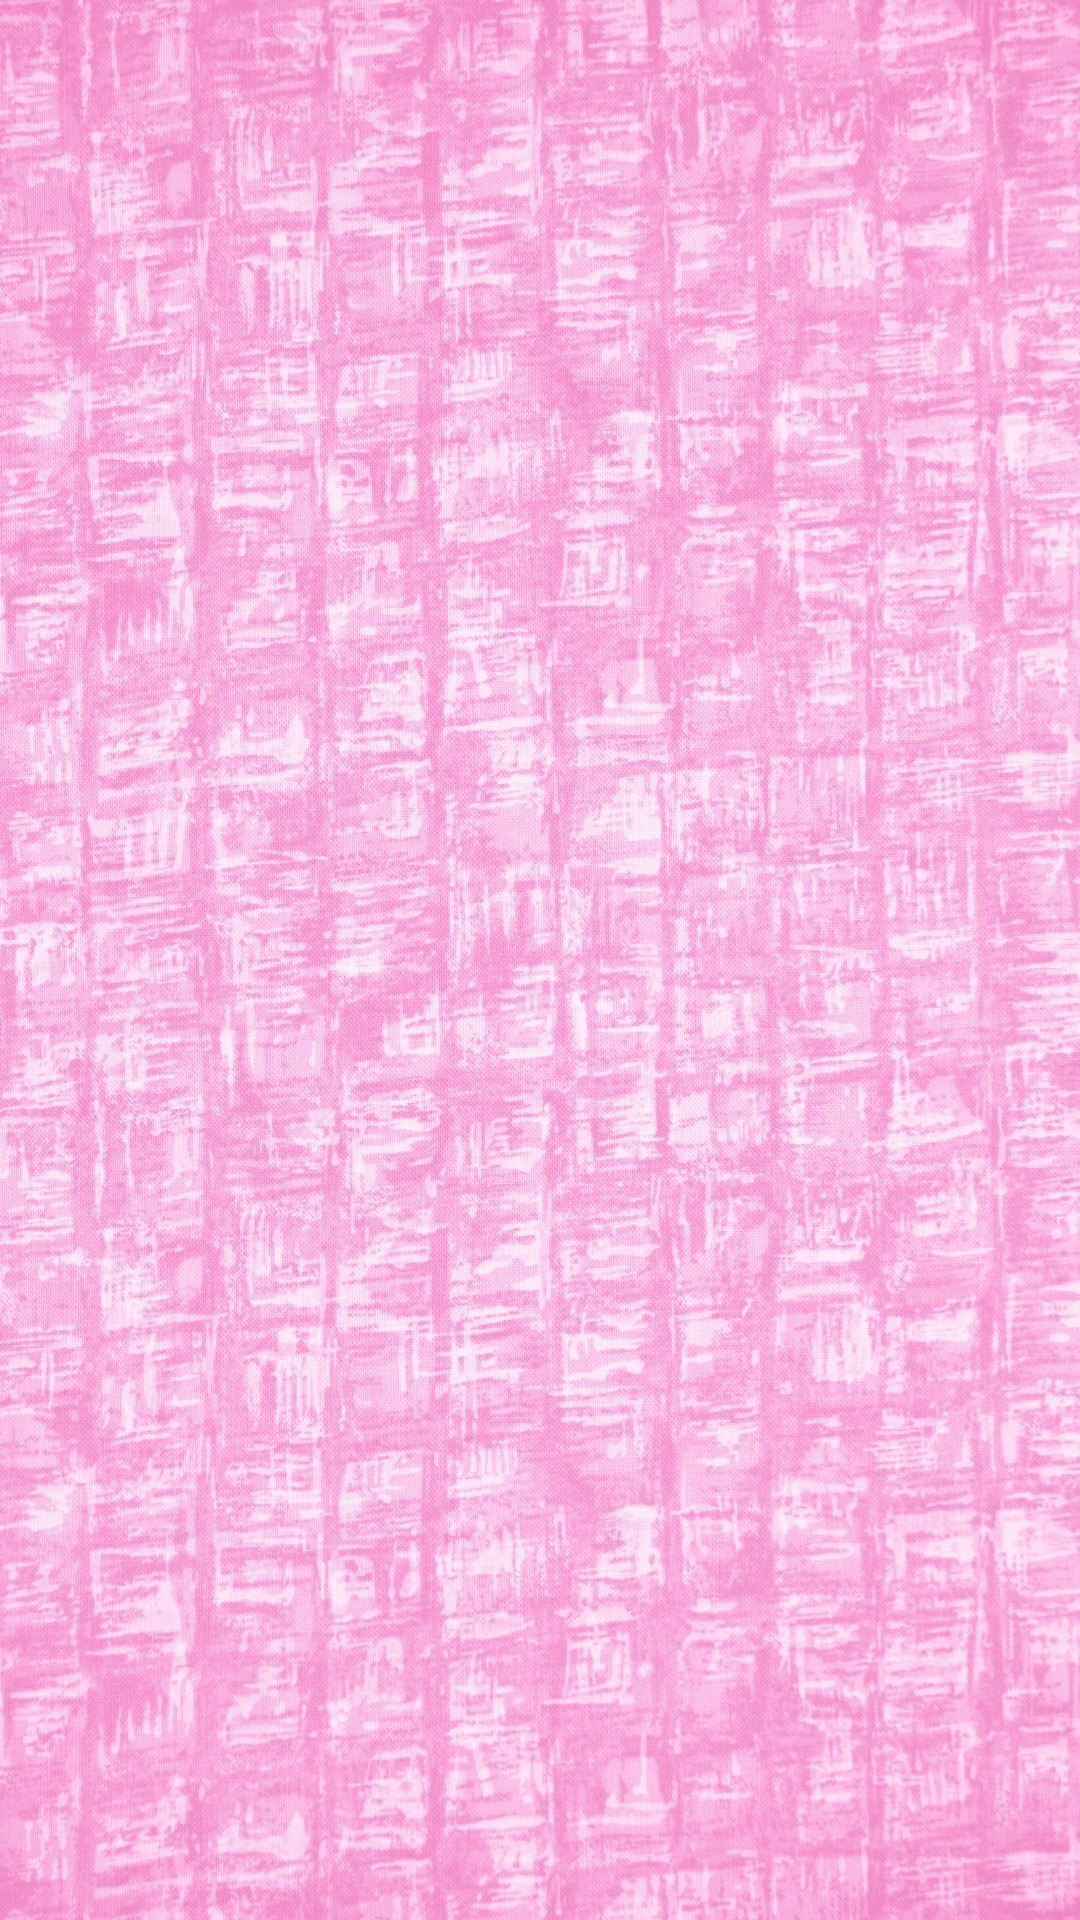 Pink Fabric Texture iPhone Wallpaper resolution 1080x1920